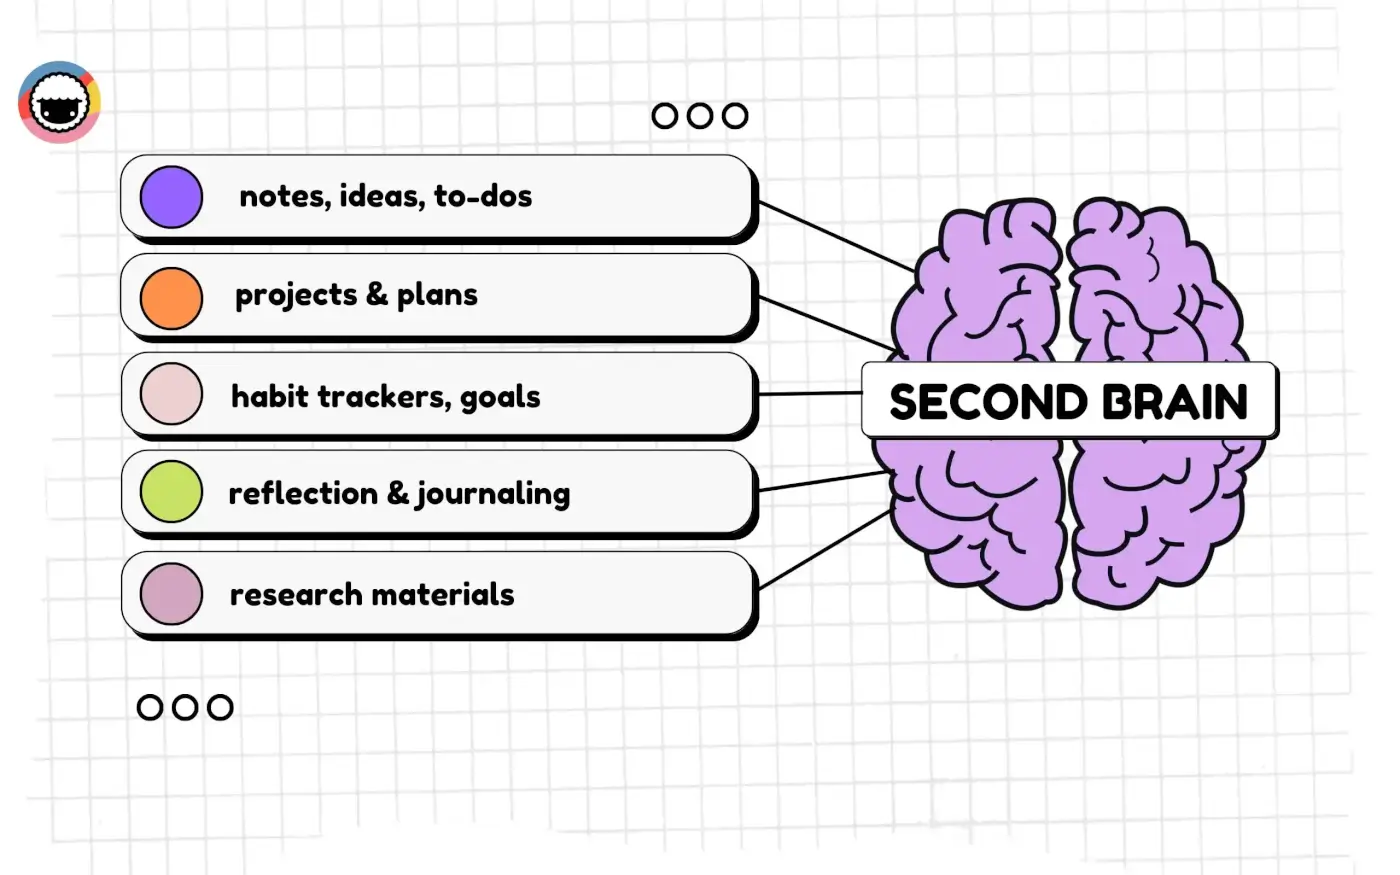 A second brain diagram.